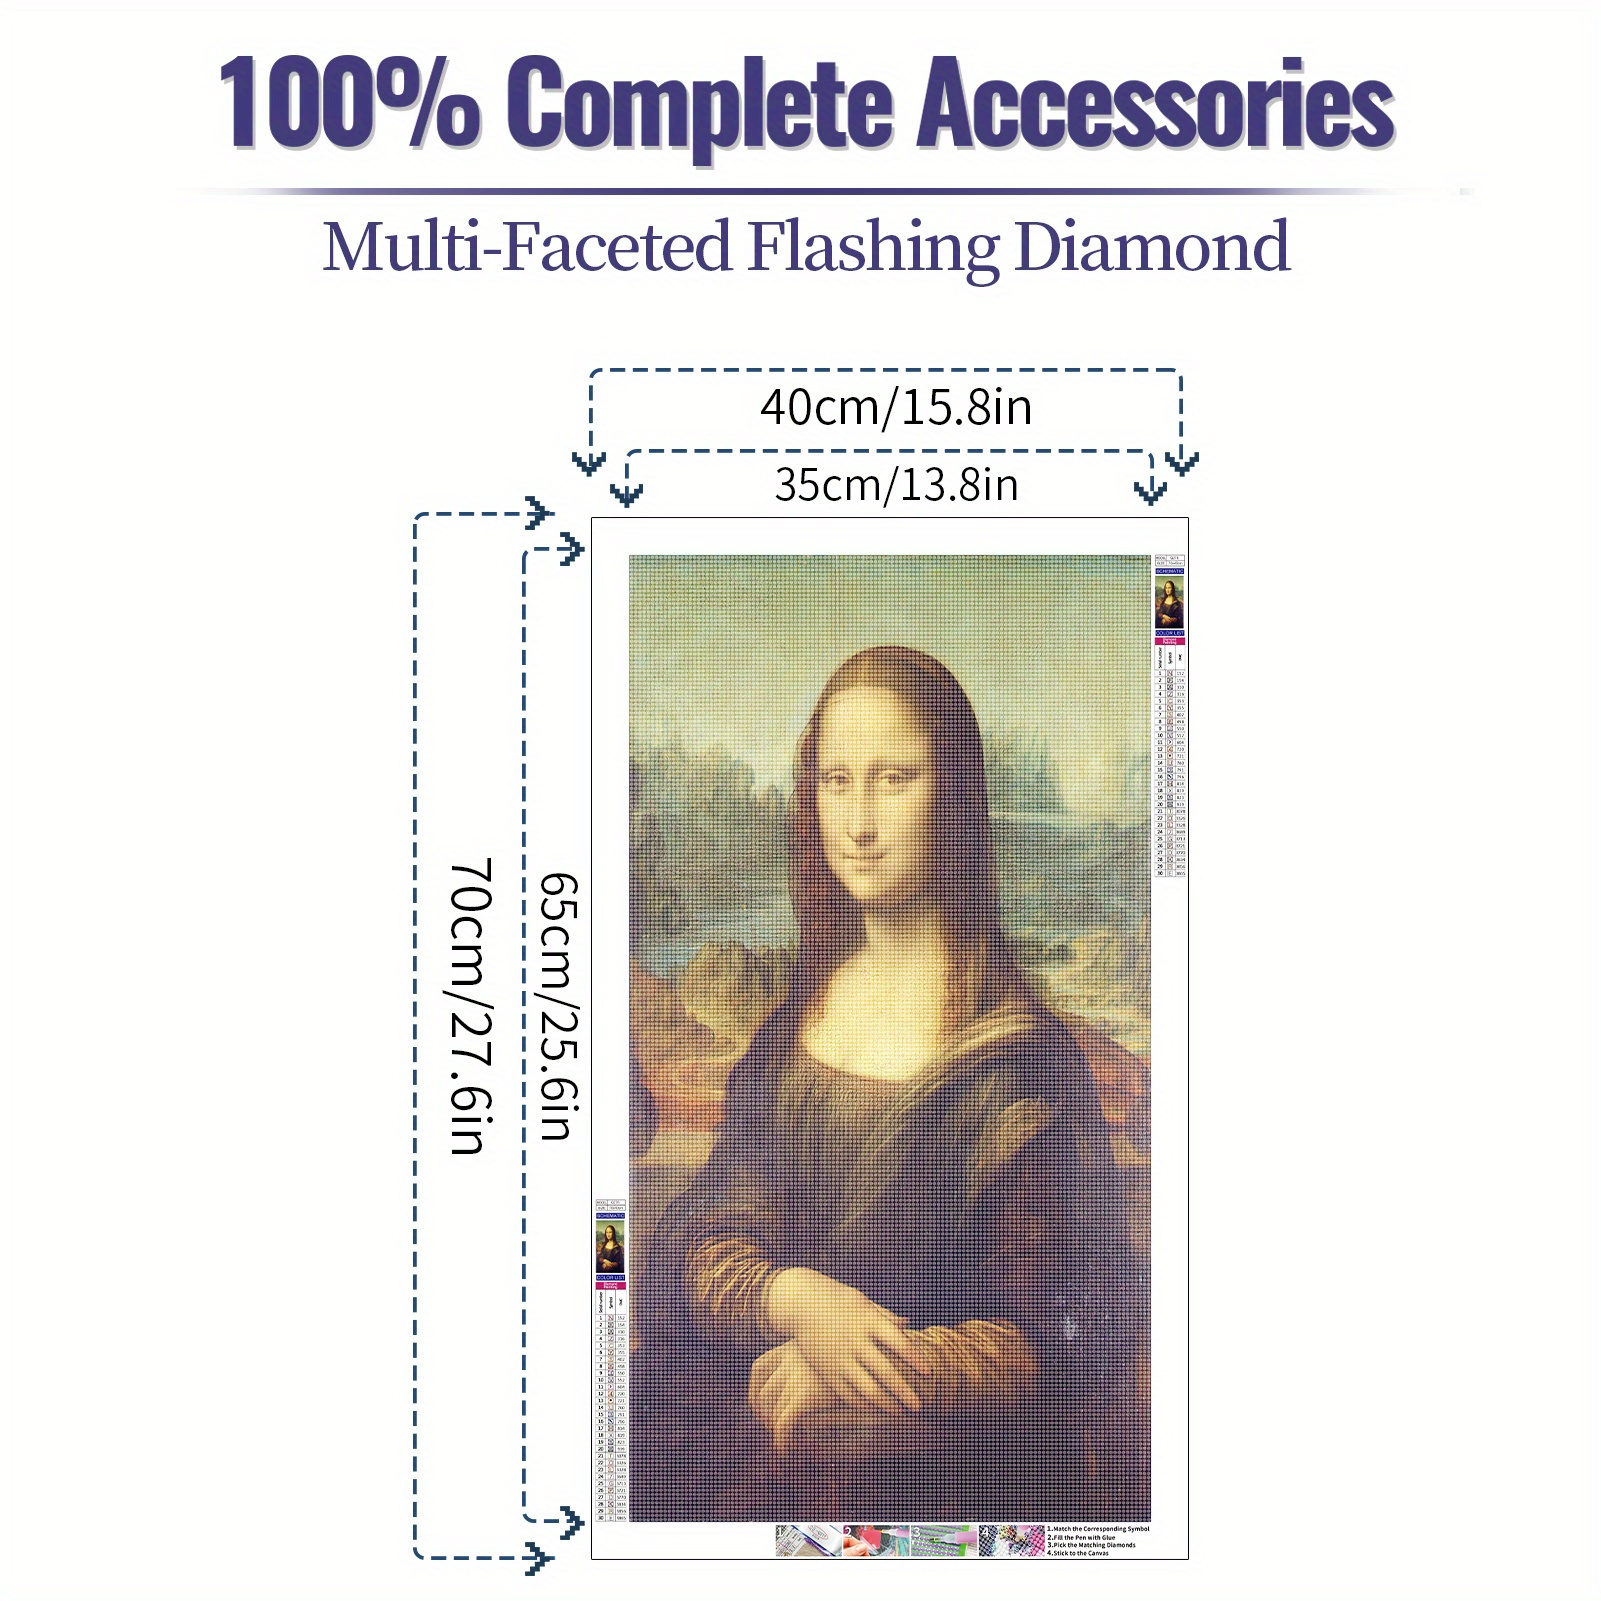 Diamond Painting Kits for Adults Mona Lisa ,5D Diamond Art Kits